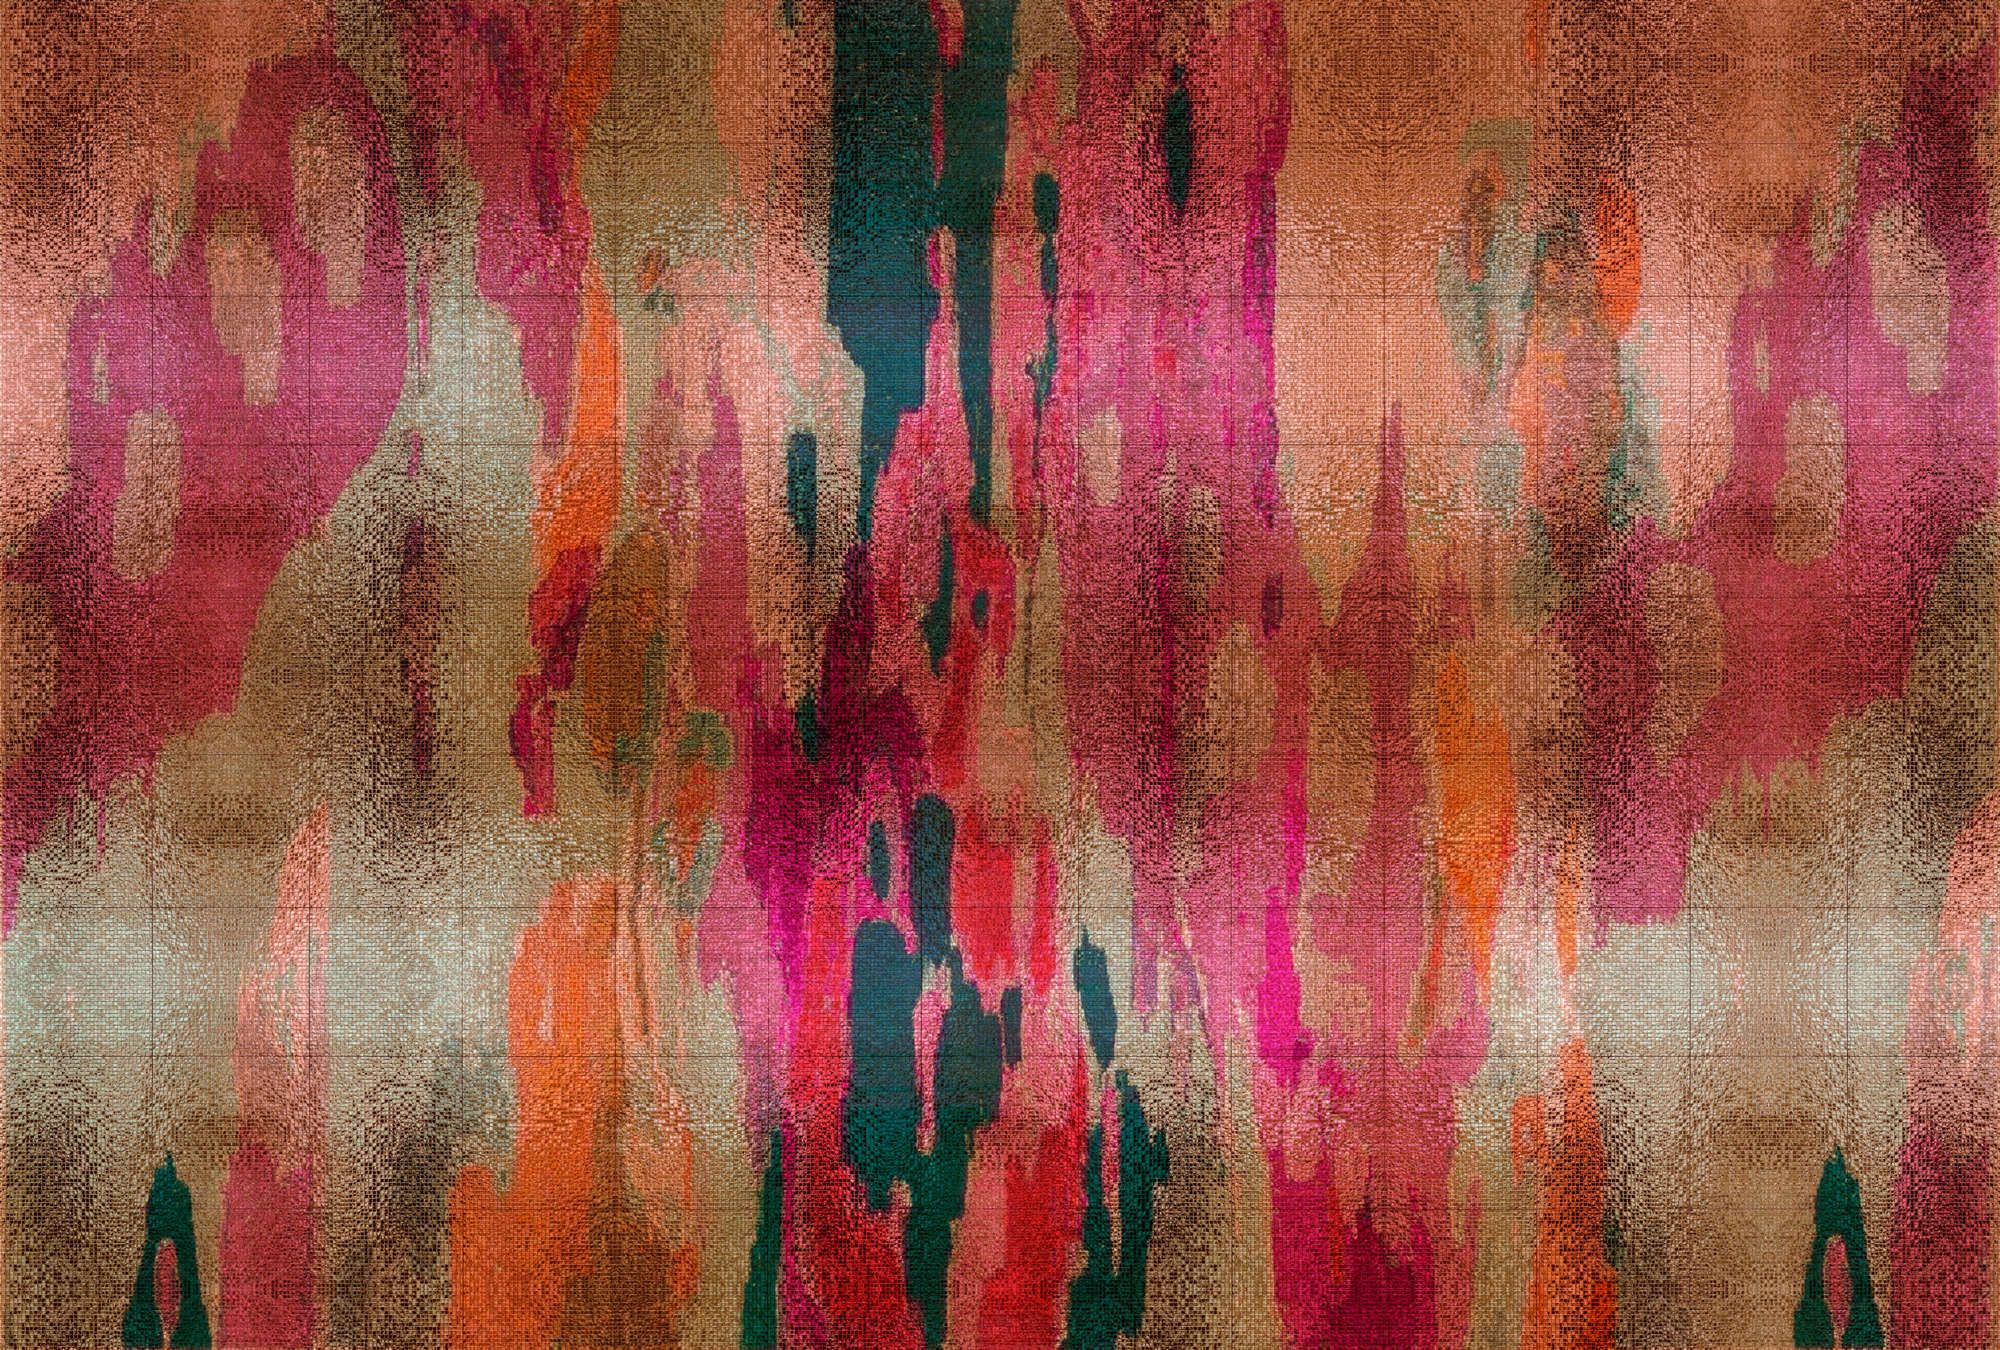             Photo wallpaper »marielle 2« - colour gradients violet, orange, petrol with mosaic structure - matt, smooth non-woven fabric
        